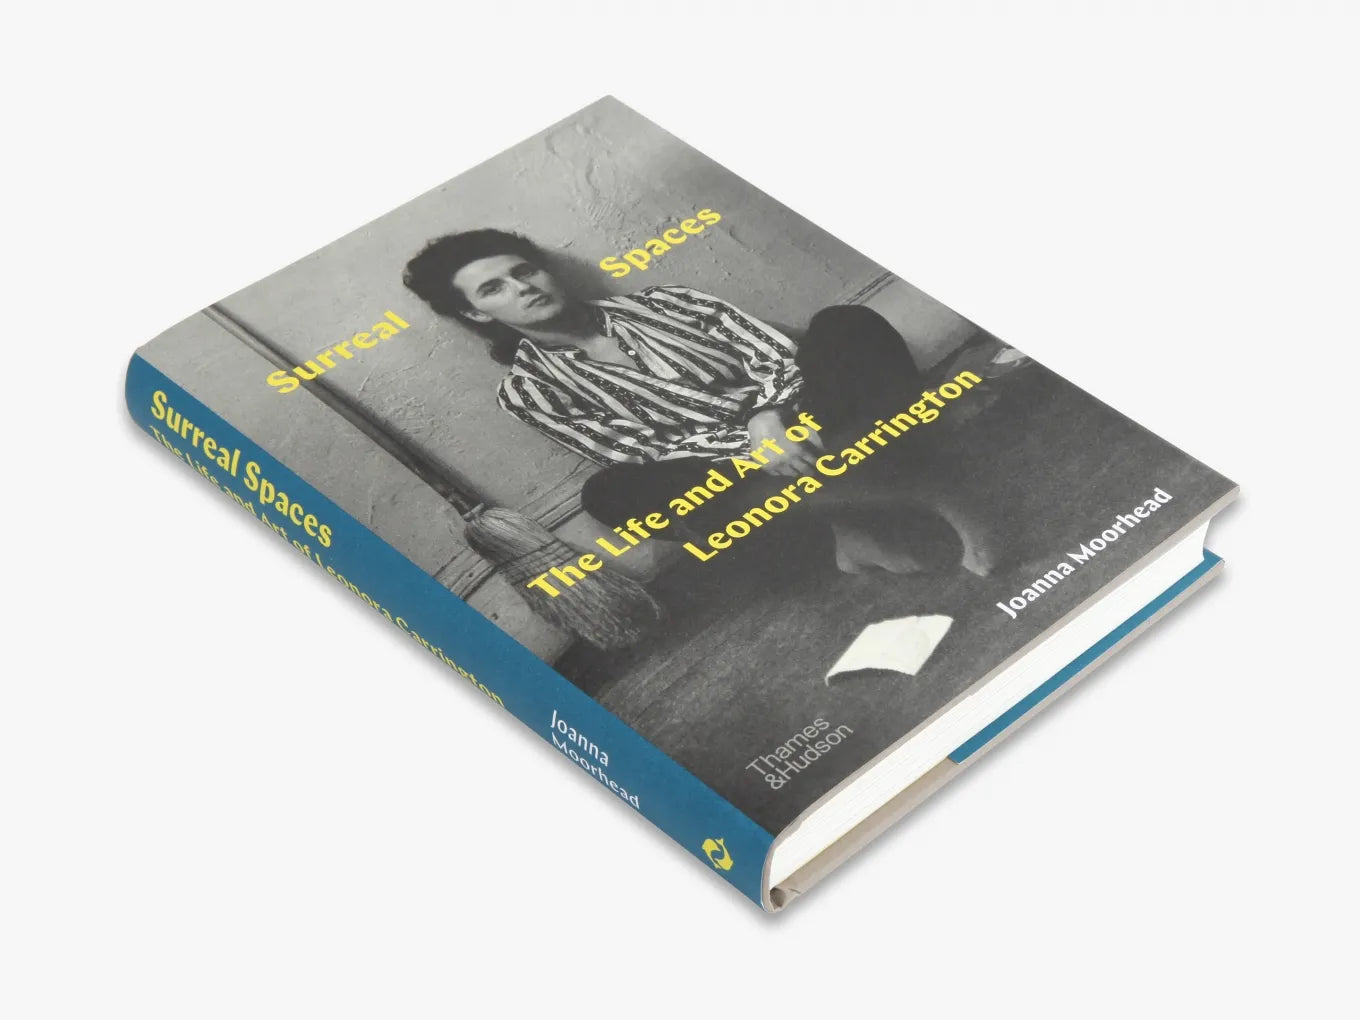 Joanna Moorhead - Surreal Spaces: The Life and Art of Leonora Carrington